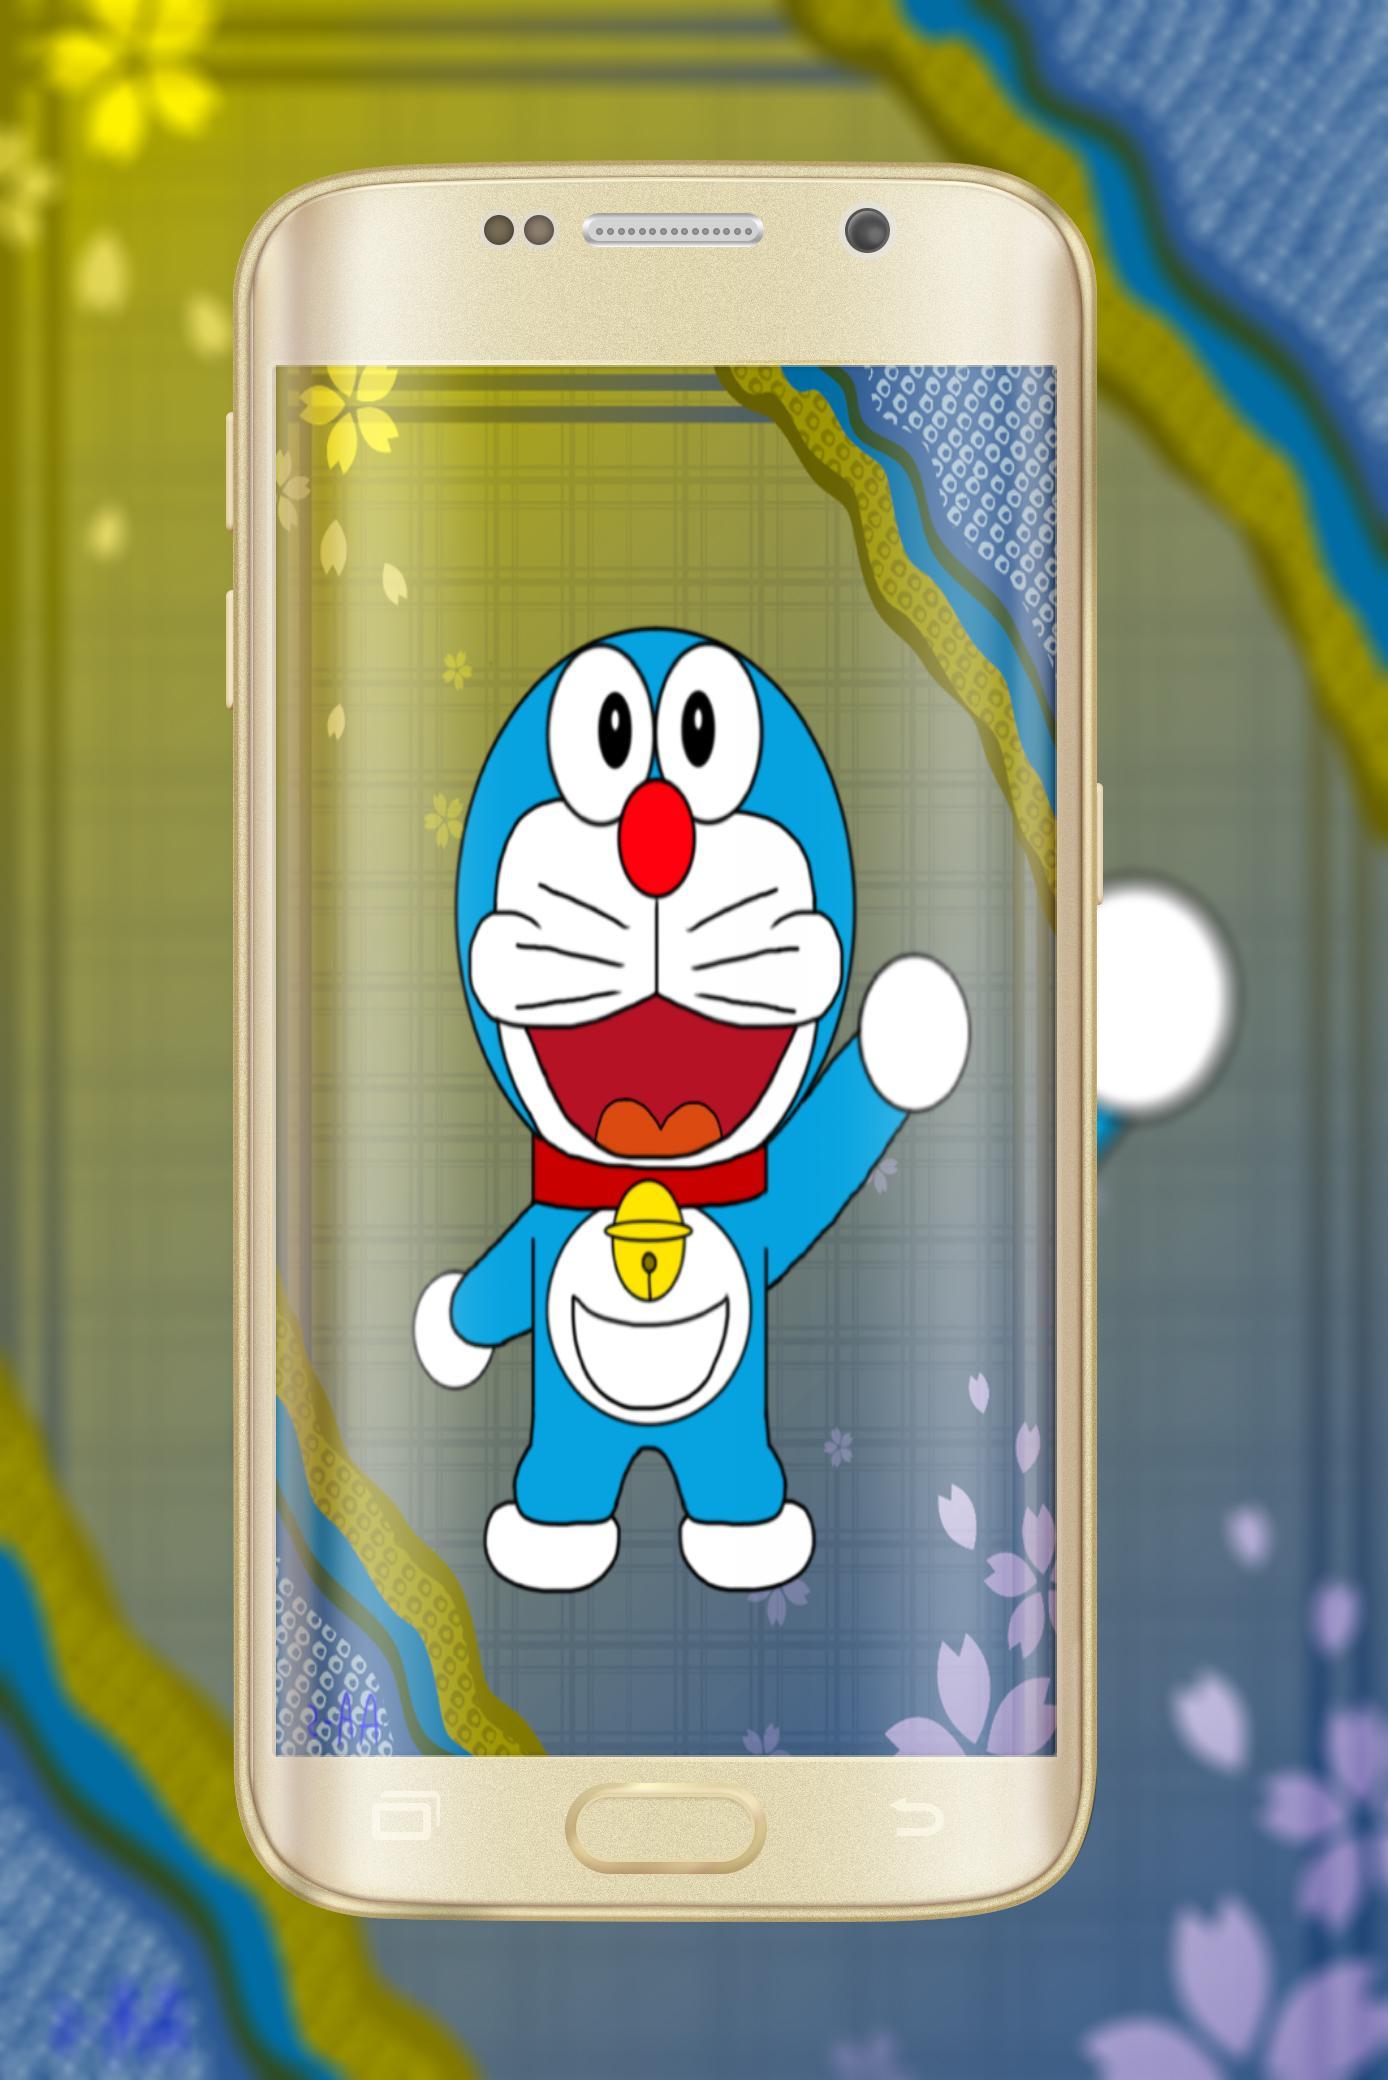 Wallpaper Wa Keren 3d Doraemon Image Num 96